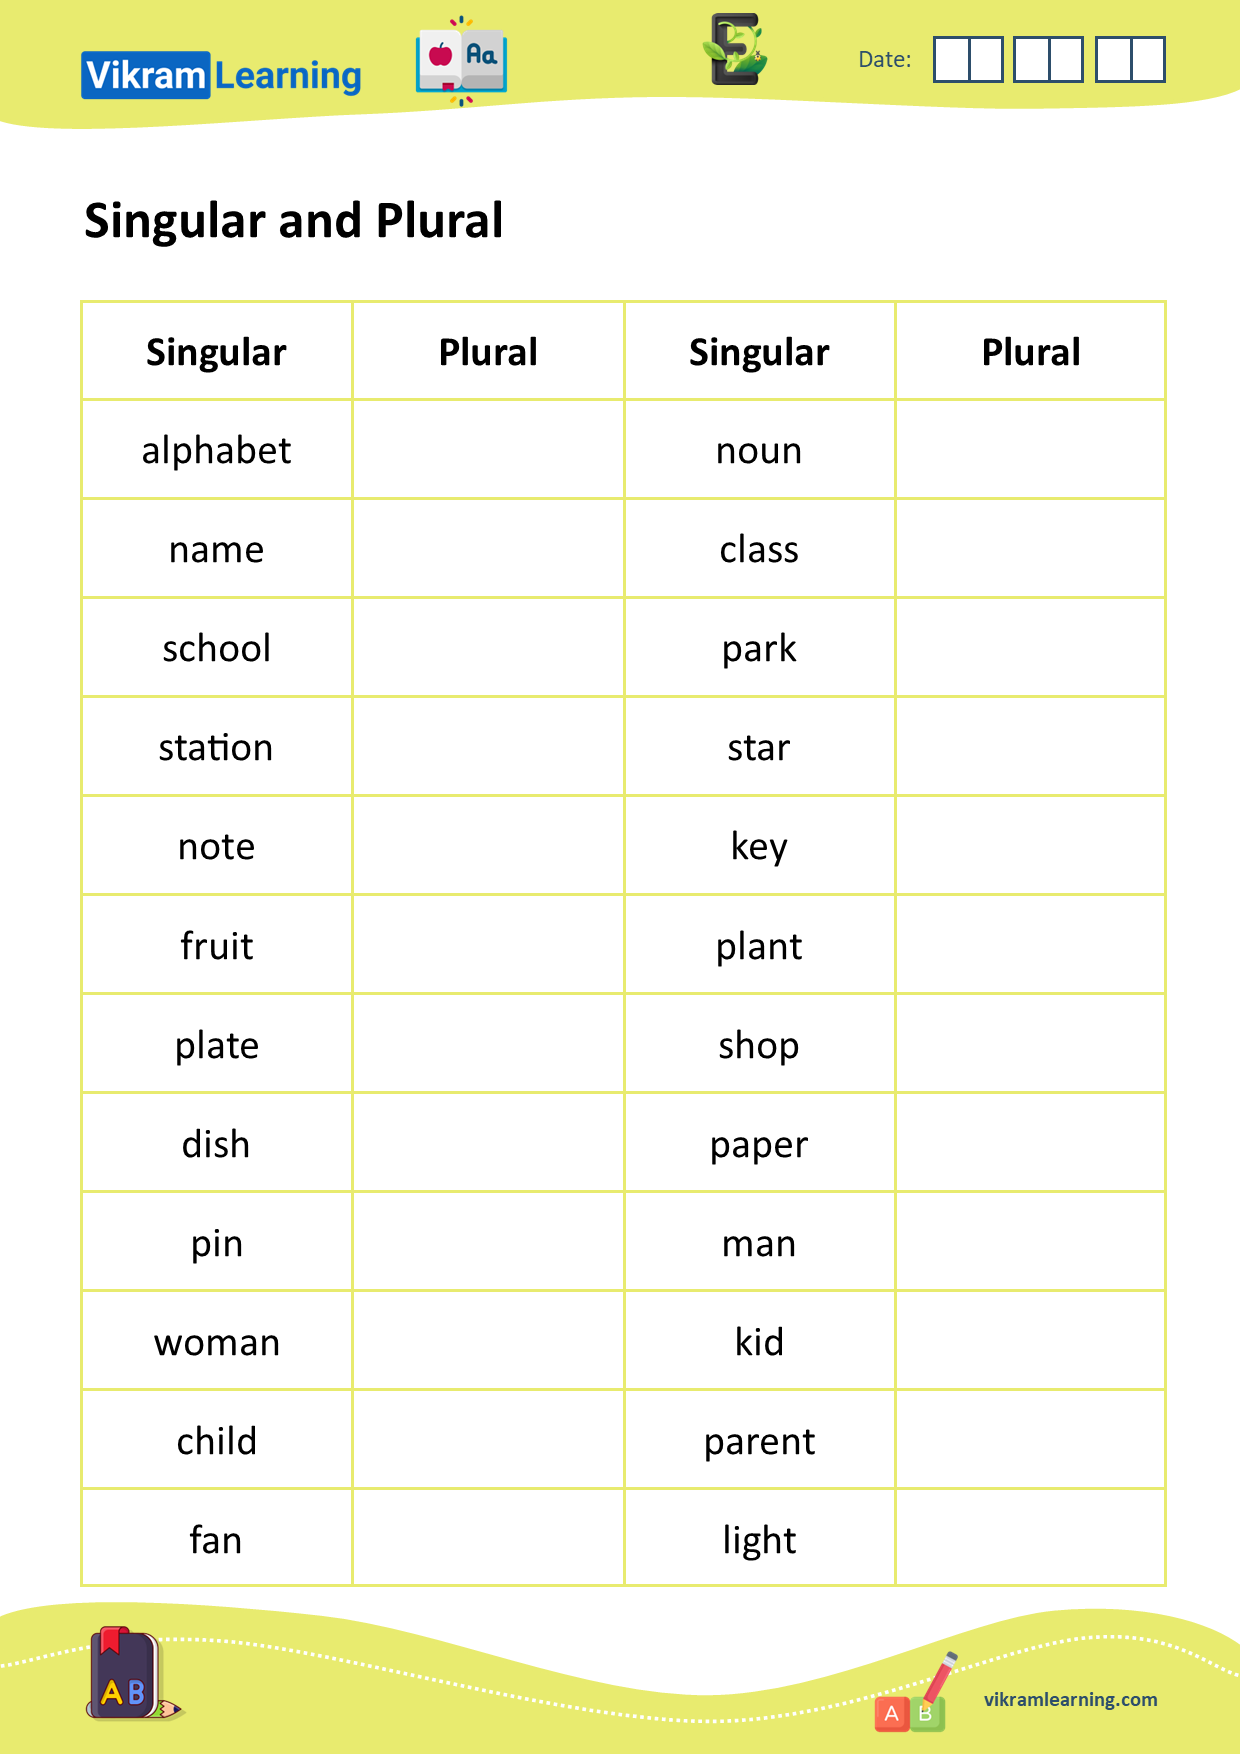 download-singular-and-plural-worksheets-vikramlearning